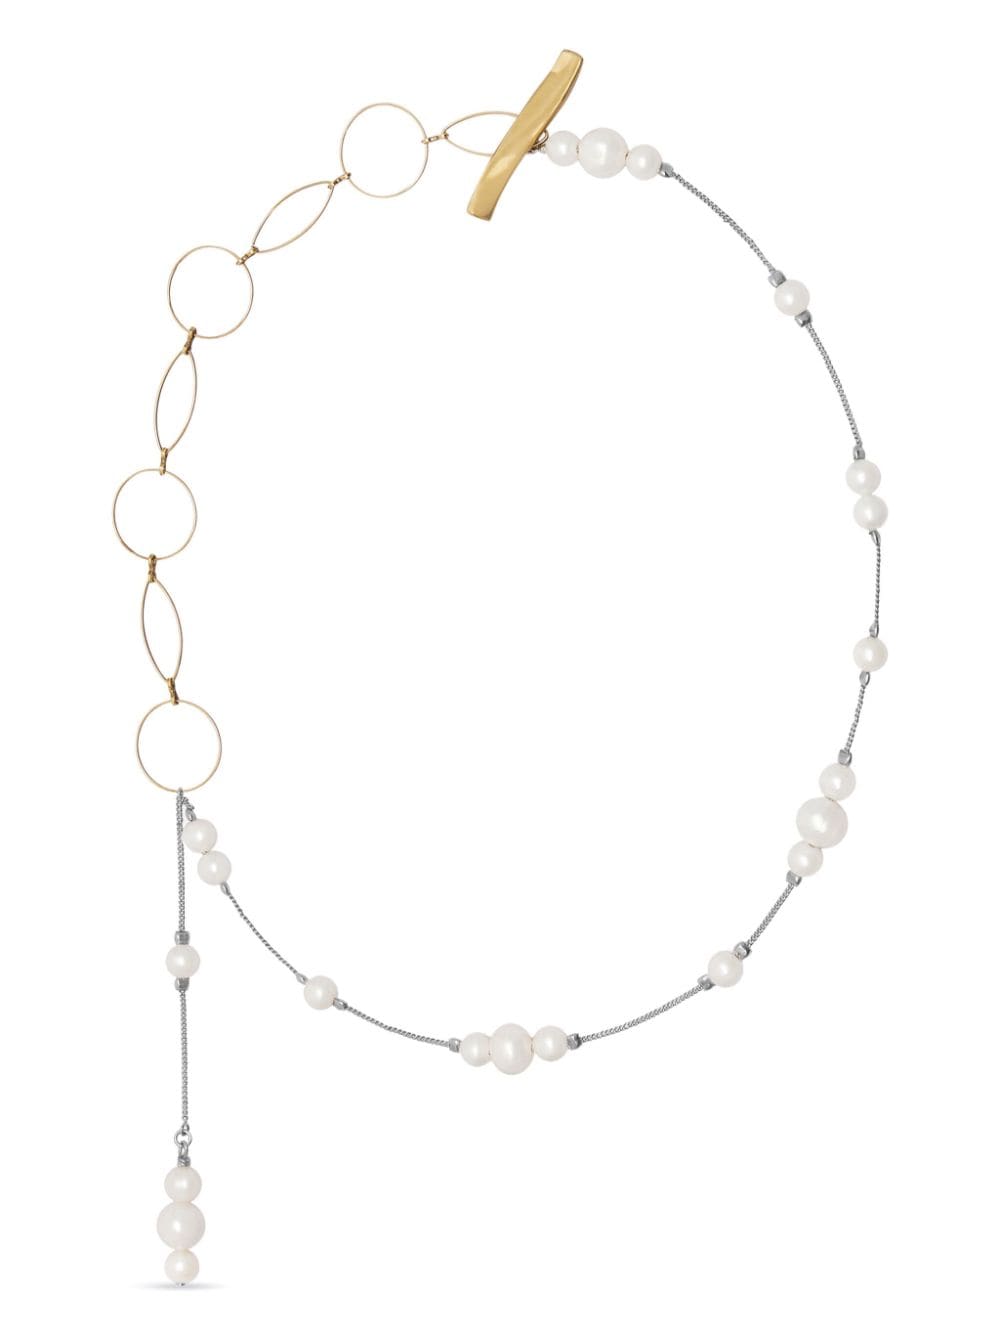 asymmetric chain necklace